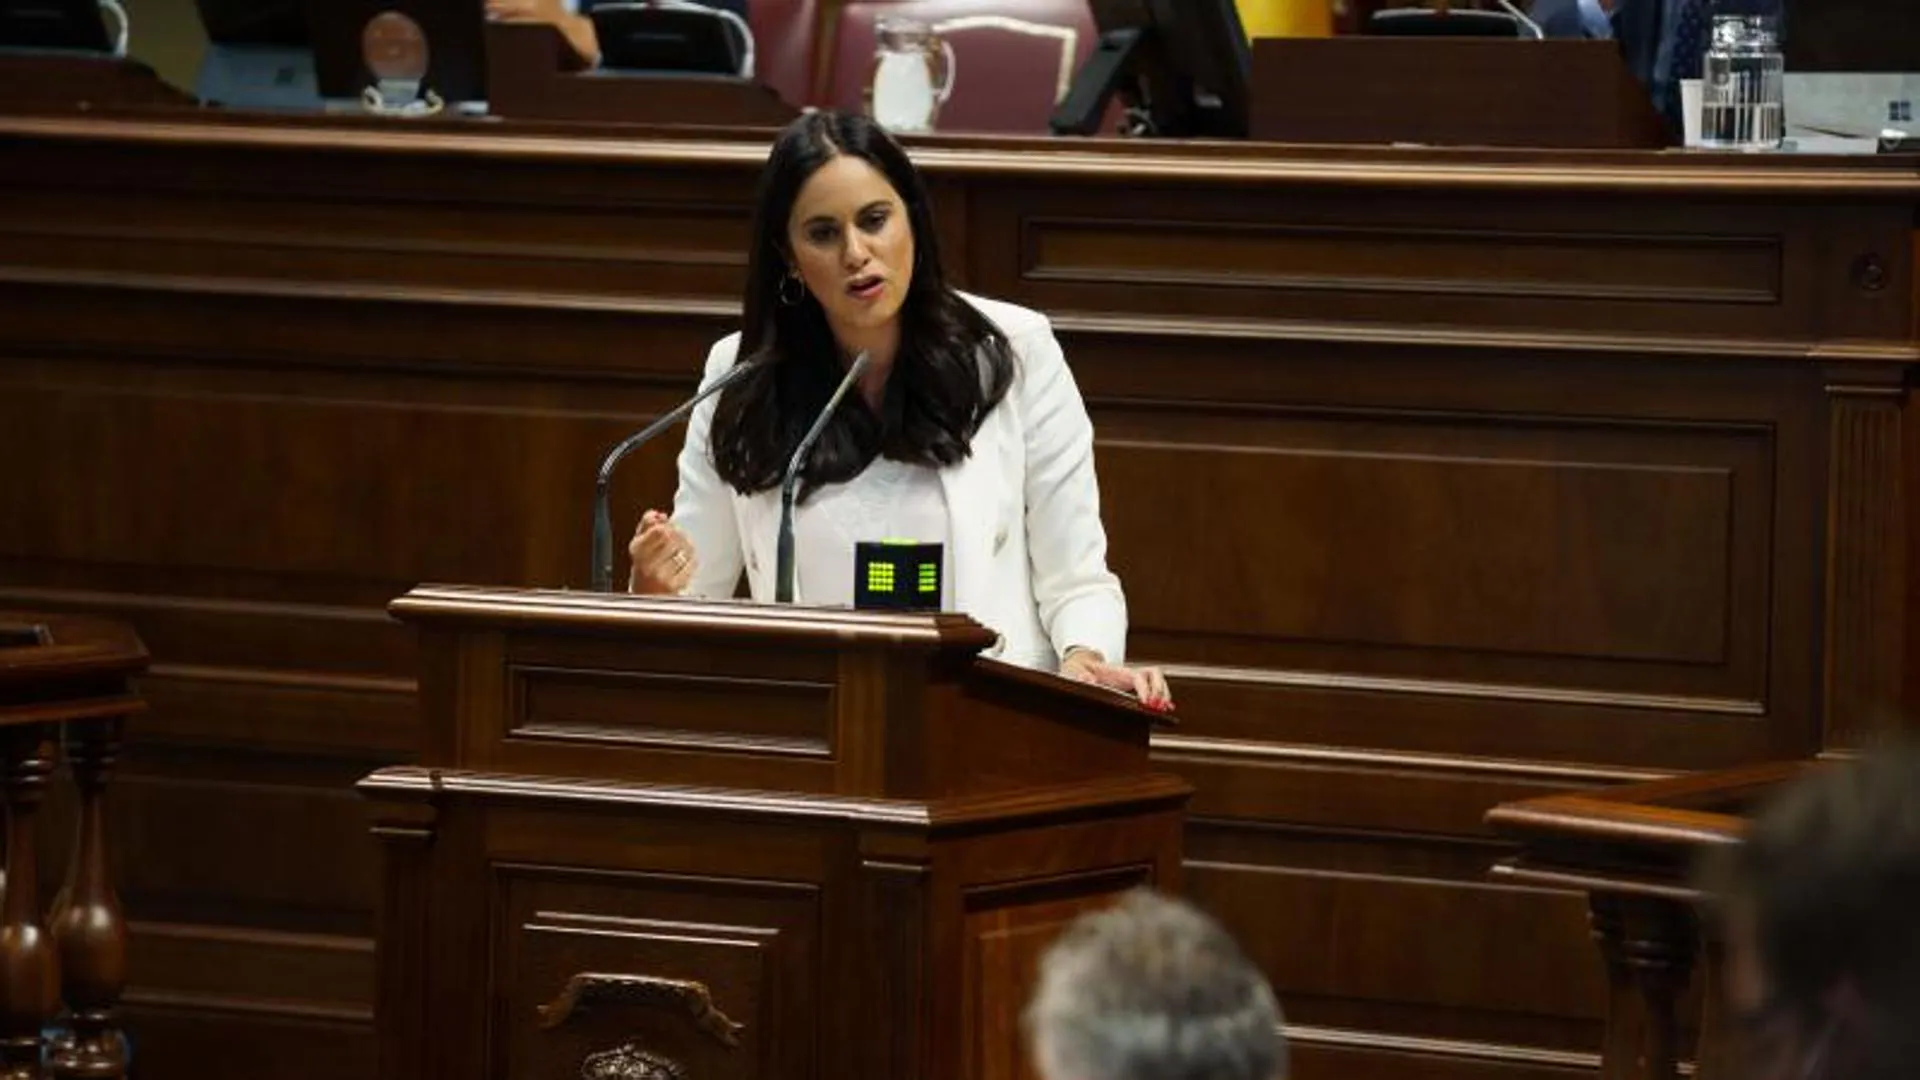 The Canarian Parliament has new deputies: Oswaldo Betancor, Vidina Espino and Cristina Calero